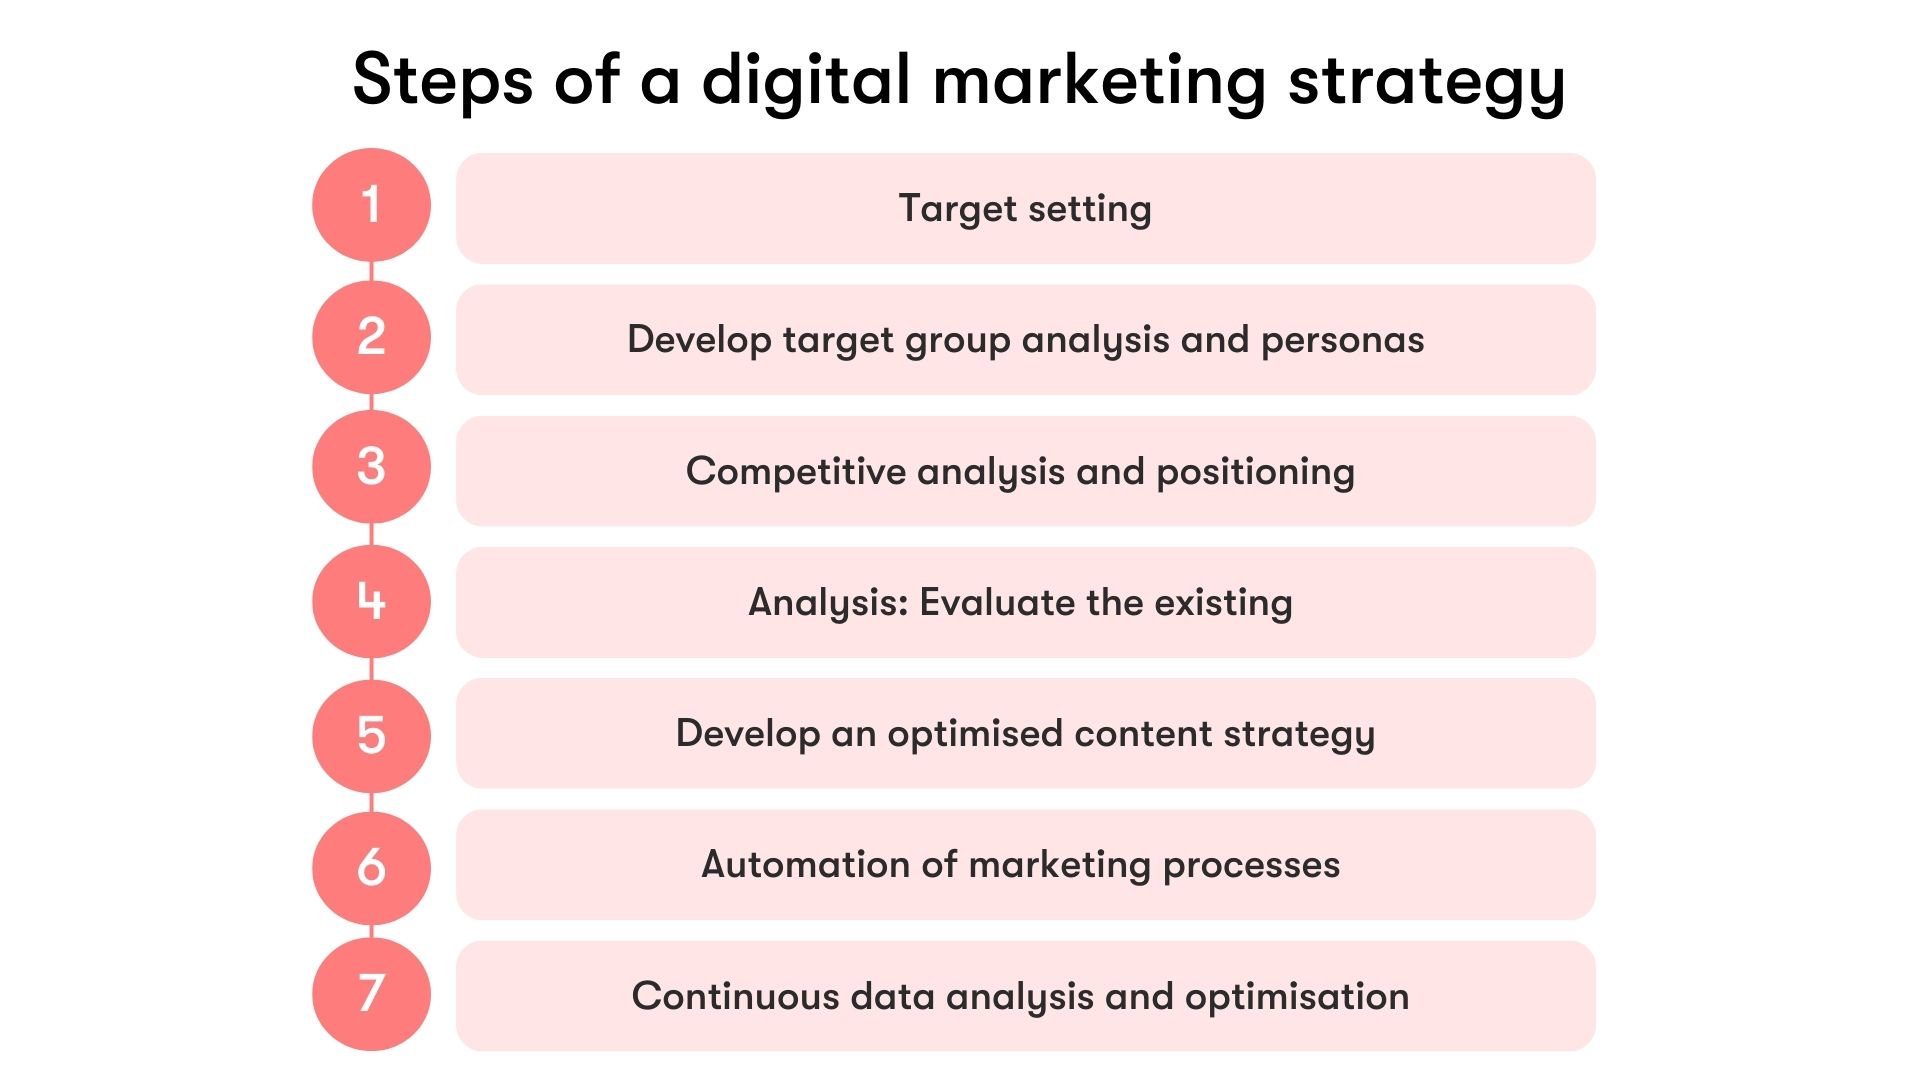 Steps of a digital marketing strategy